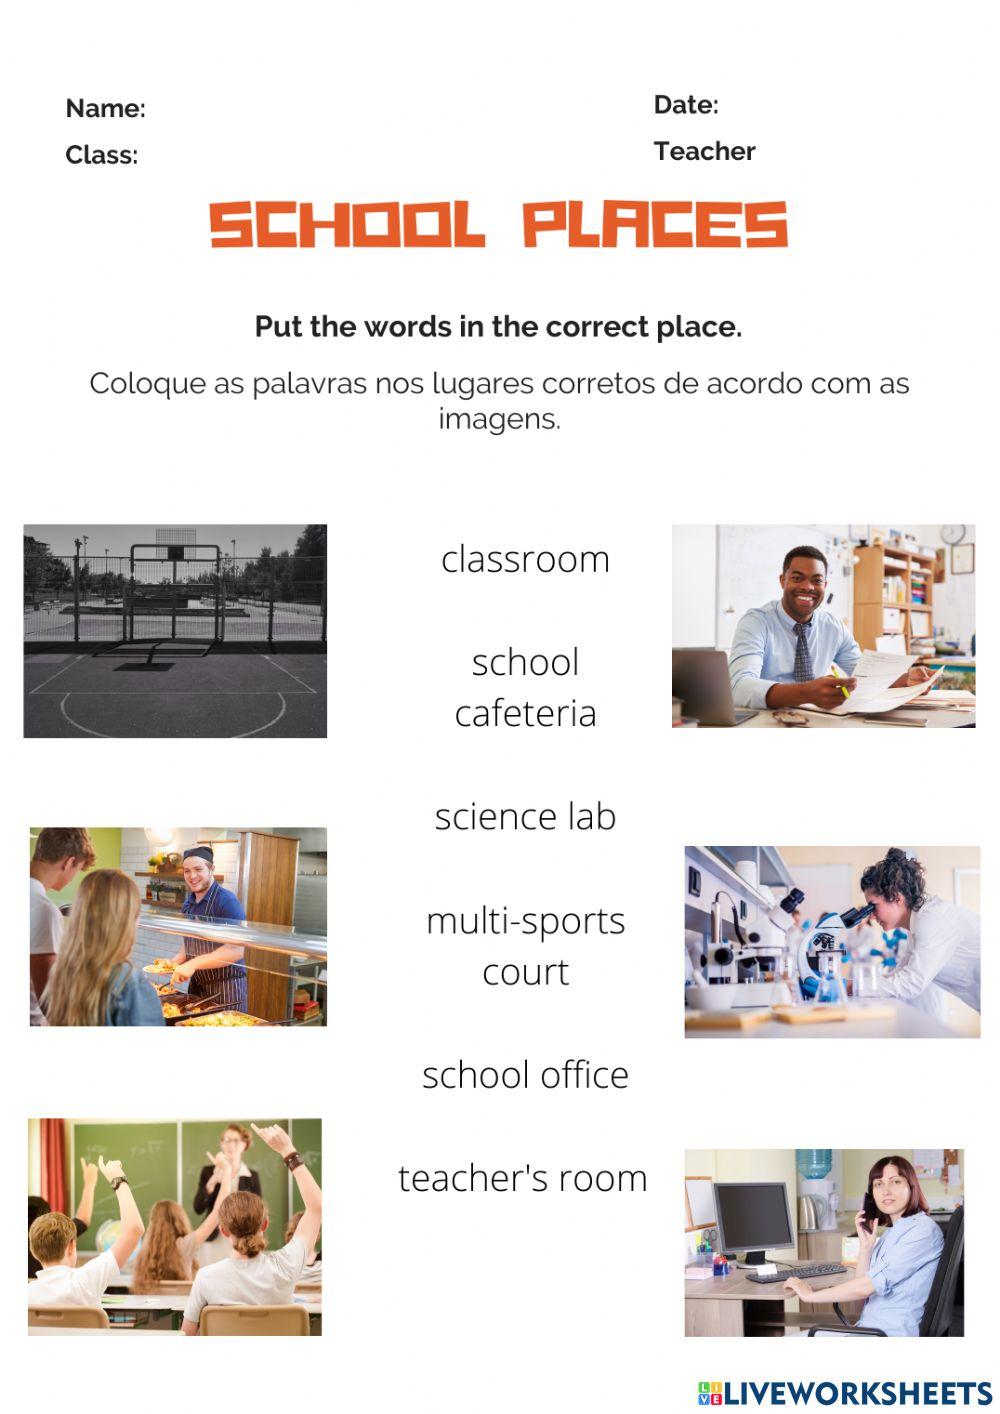 School places